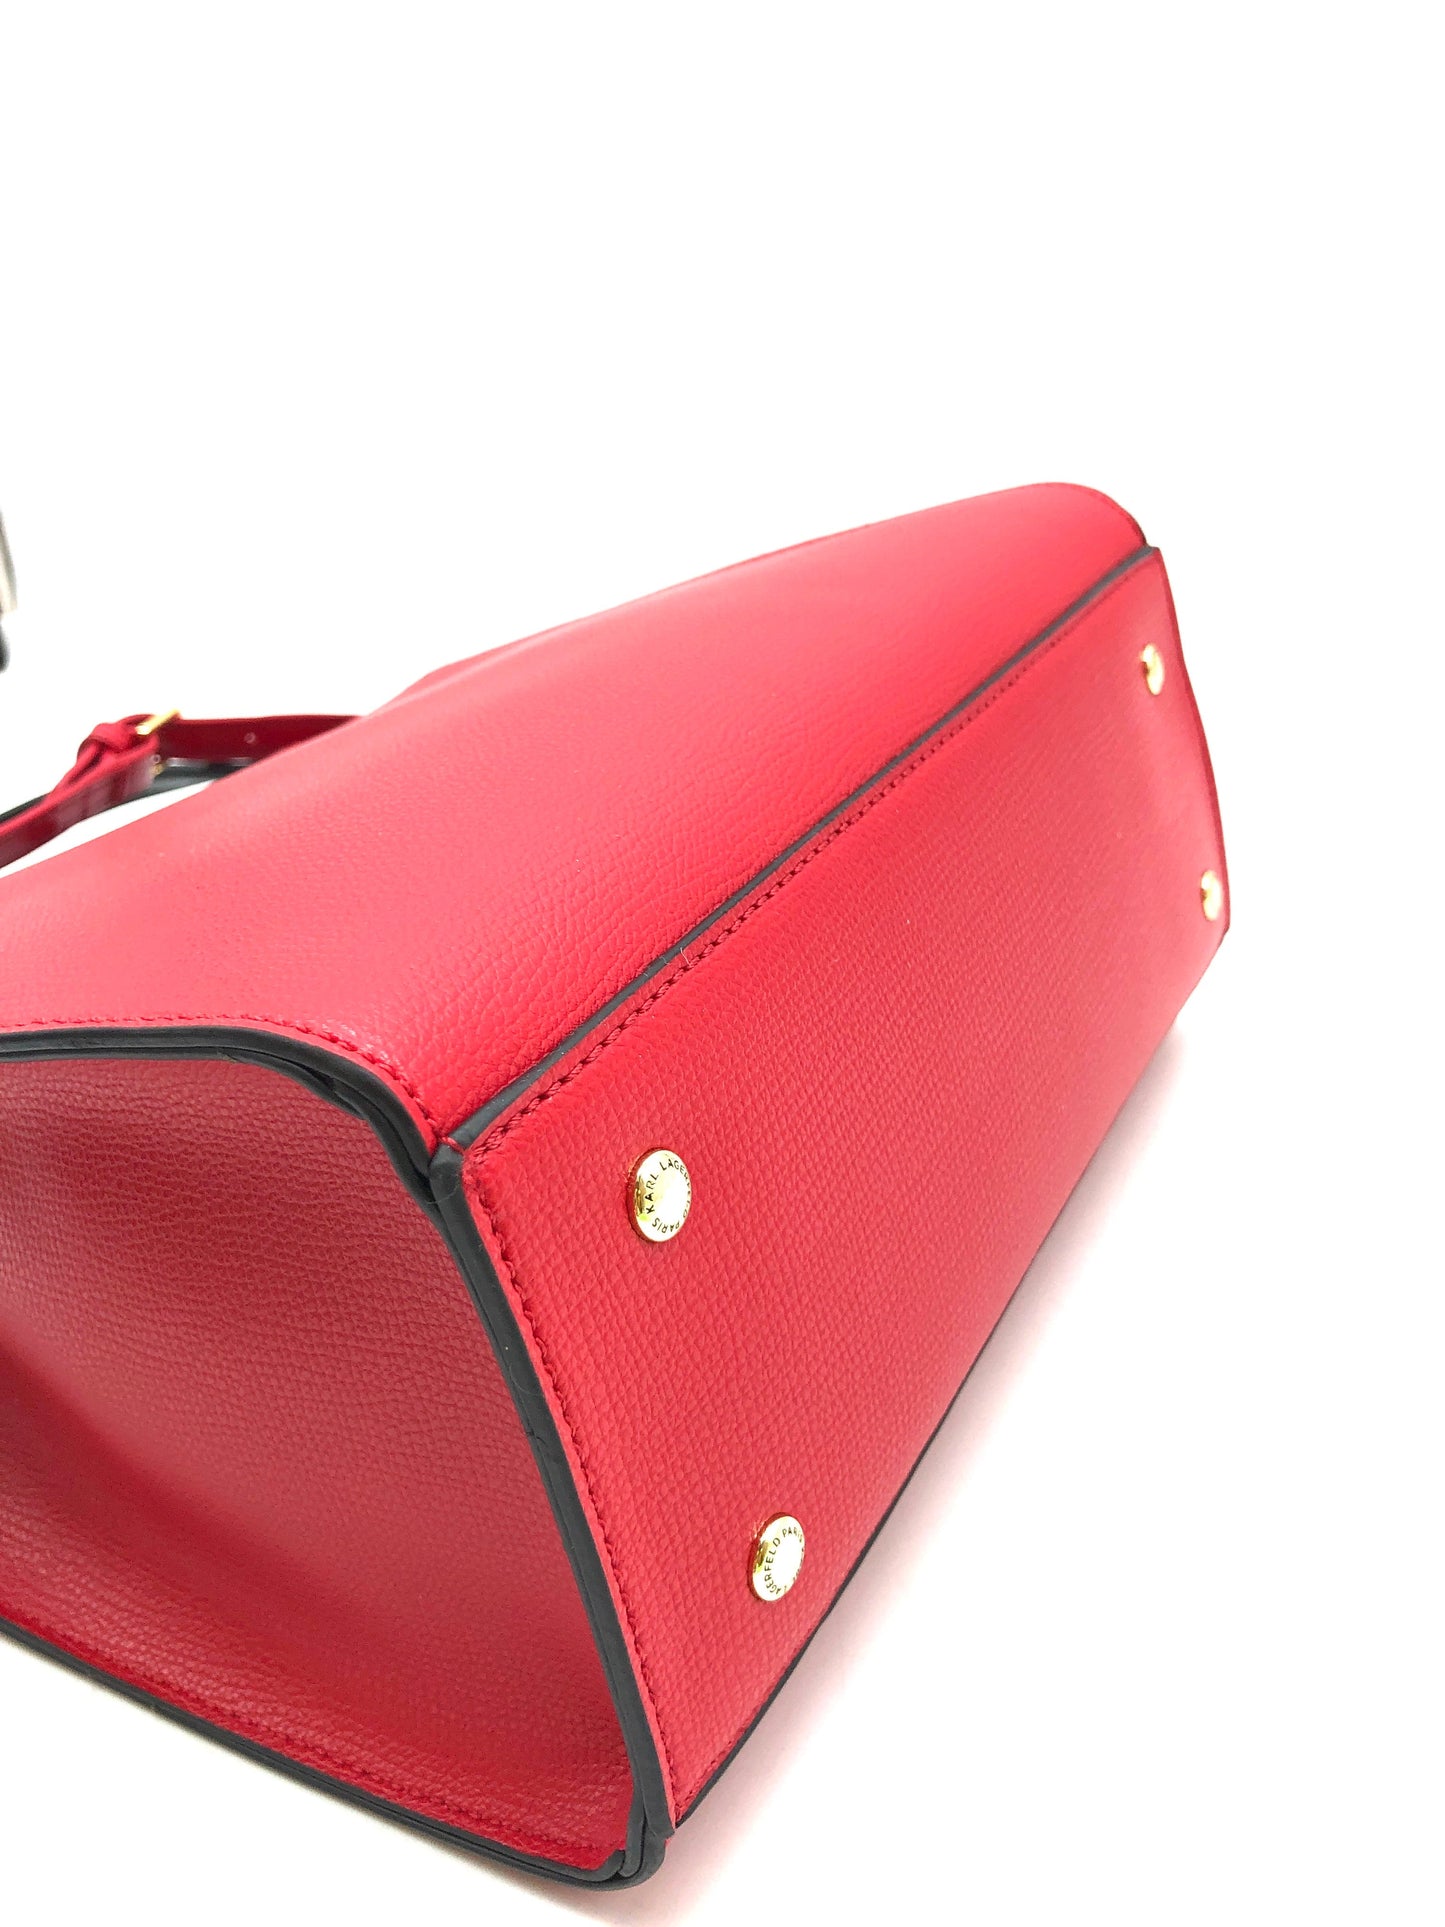 Handbag Designer Karl Lagerfeld, Size Medium